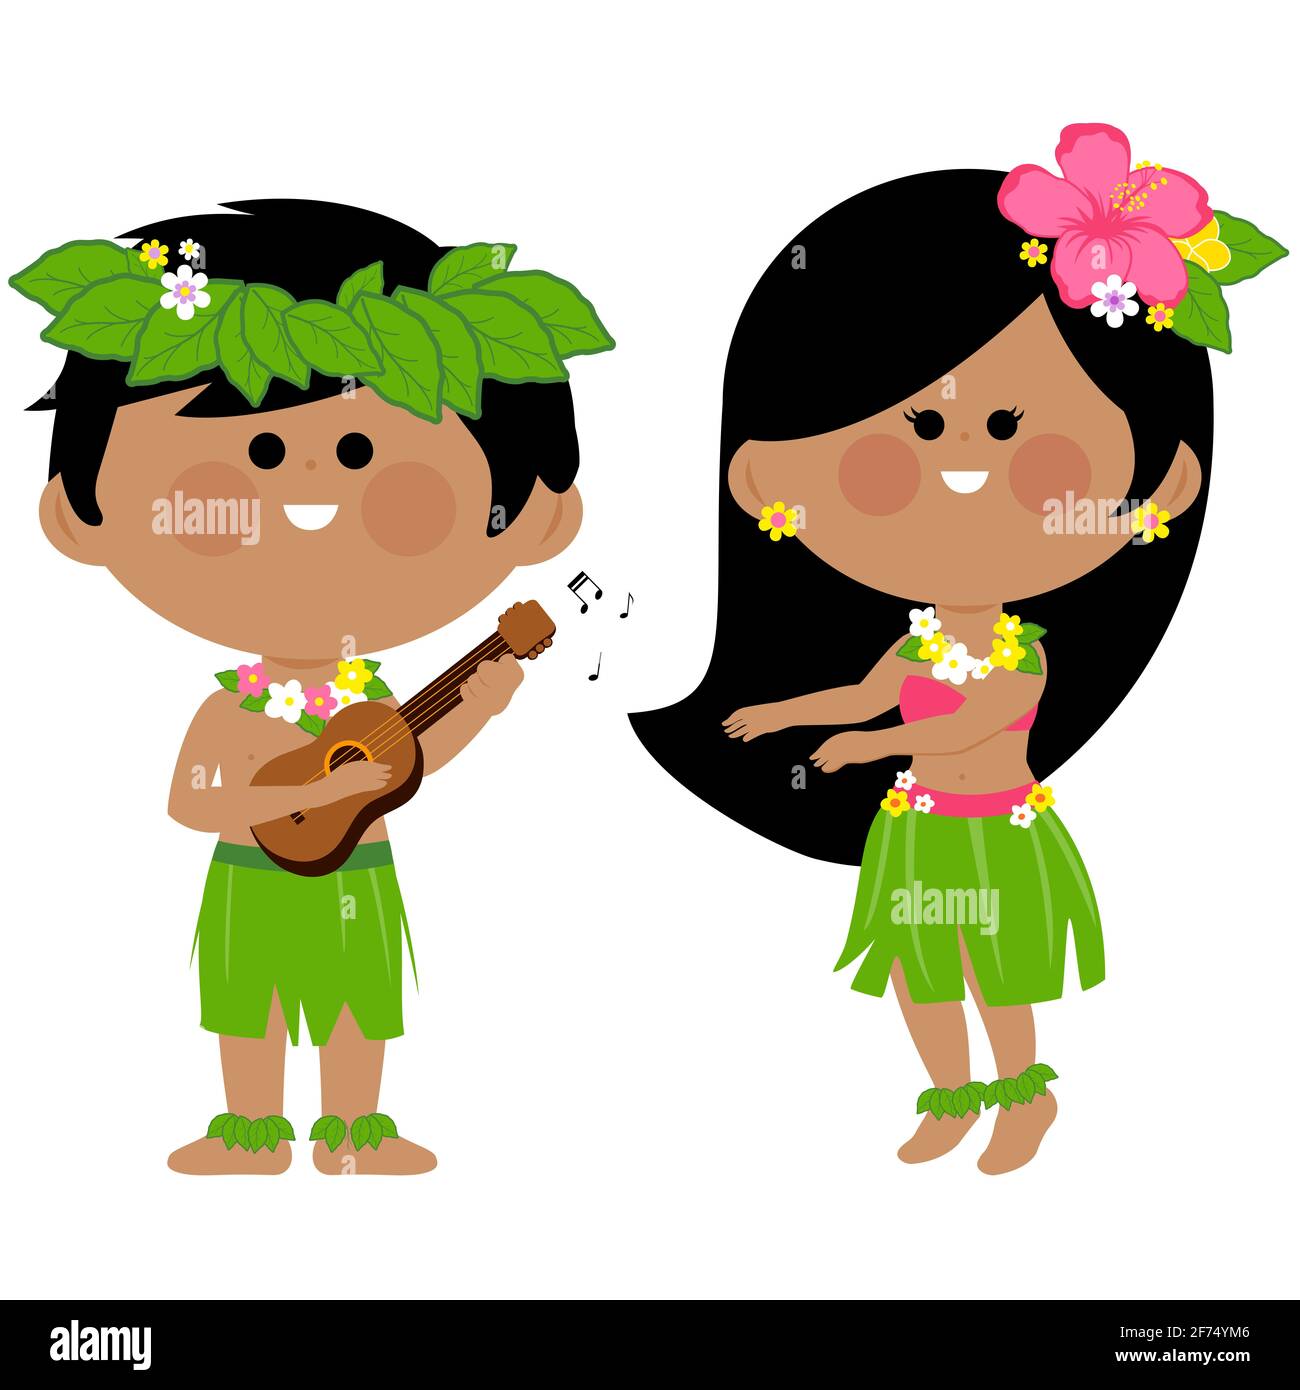 Hawaiian children playing music and hula dancing. Stock Photo